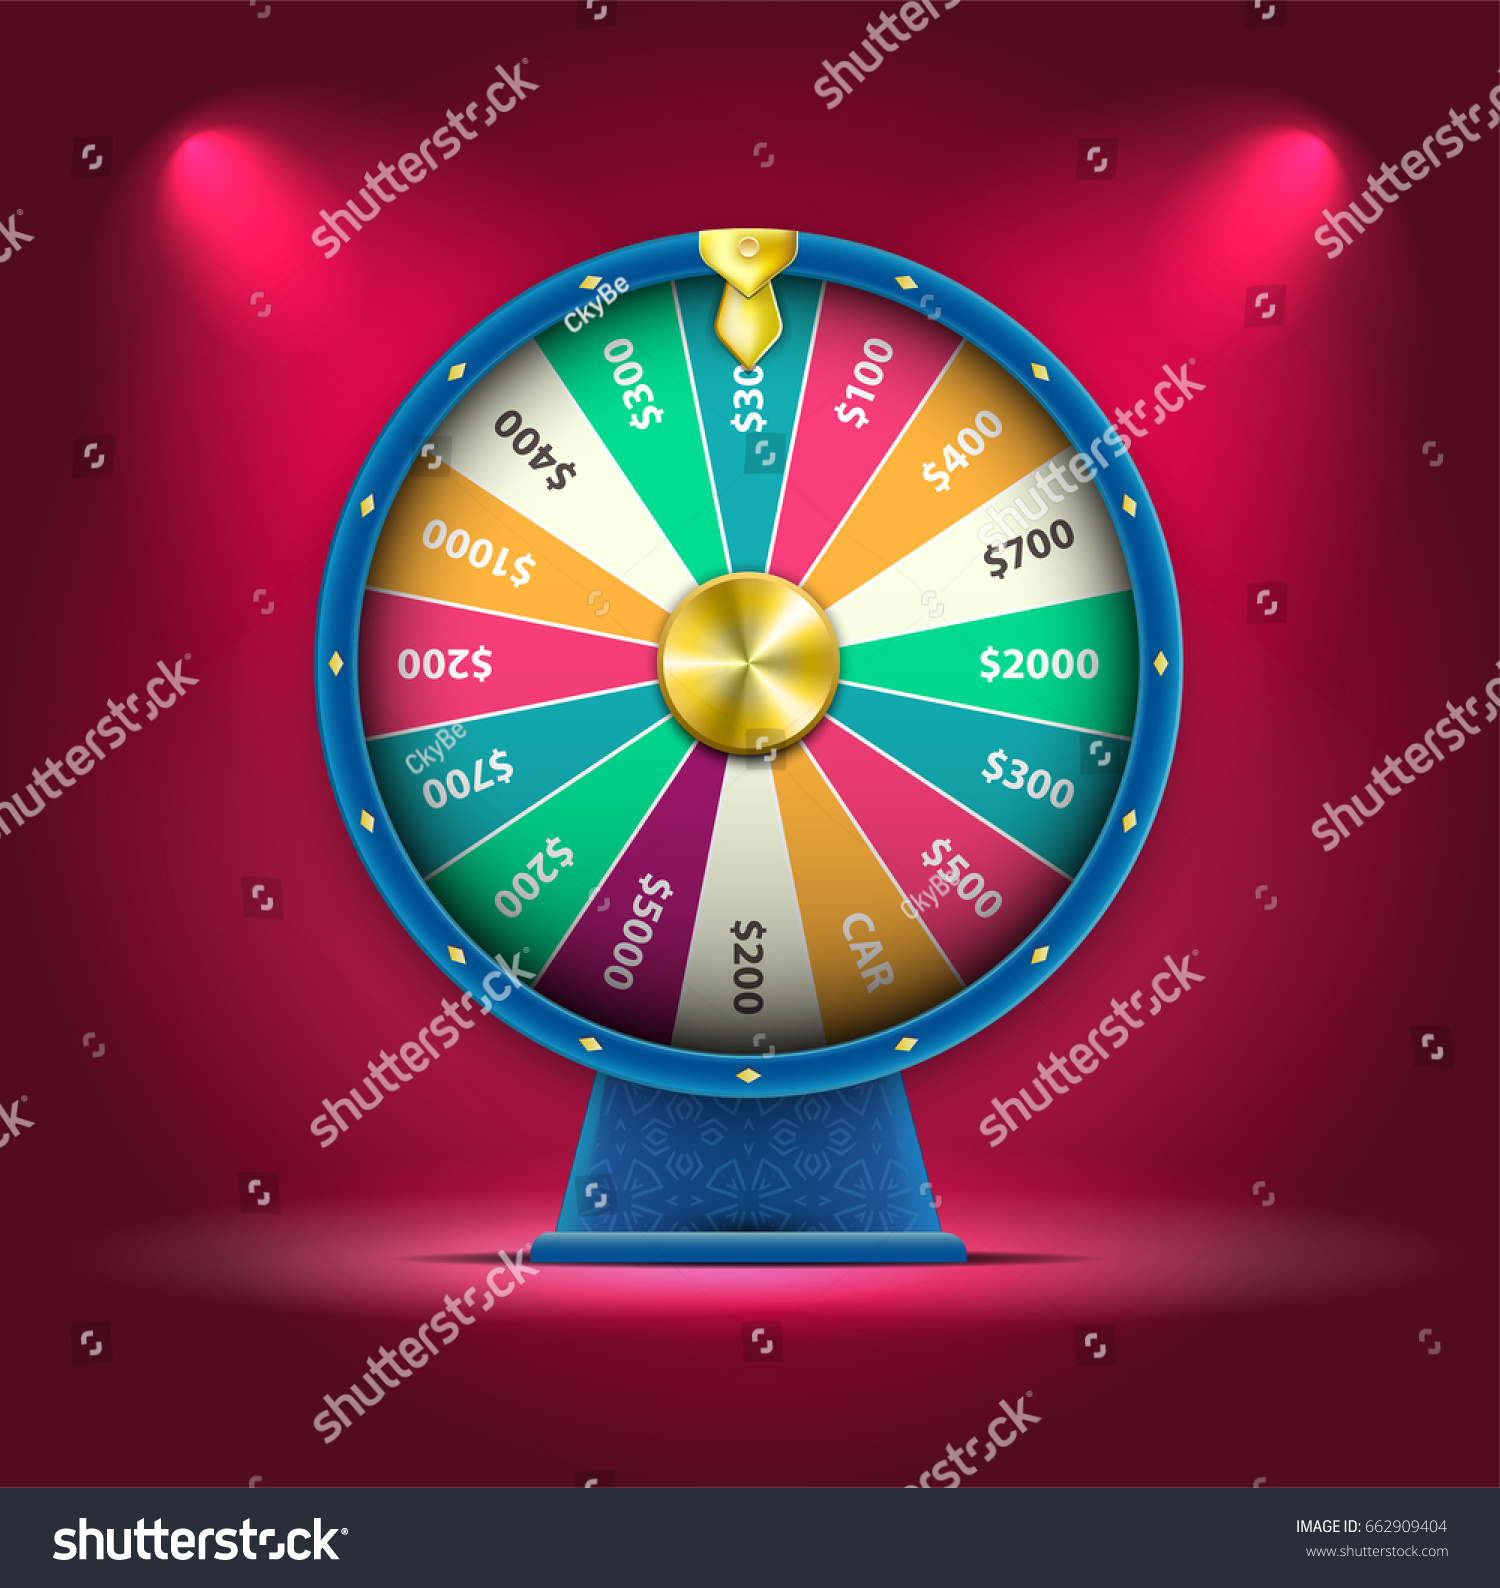 Vector 3d Spinning Fortune Wheel Realistic Stock Vector 662909404 - Shutterstock1500 x 1588